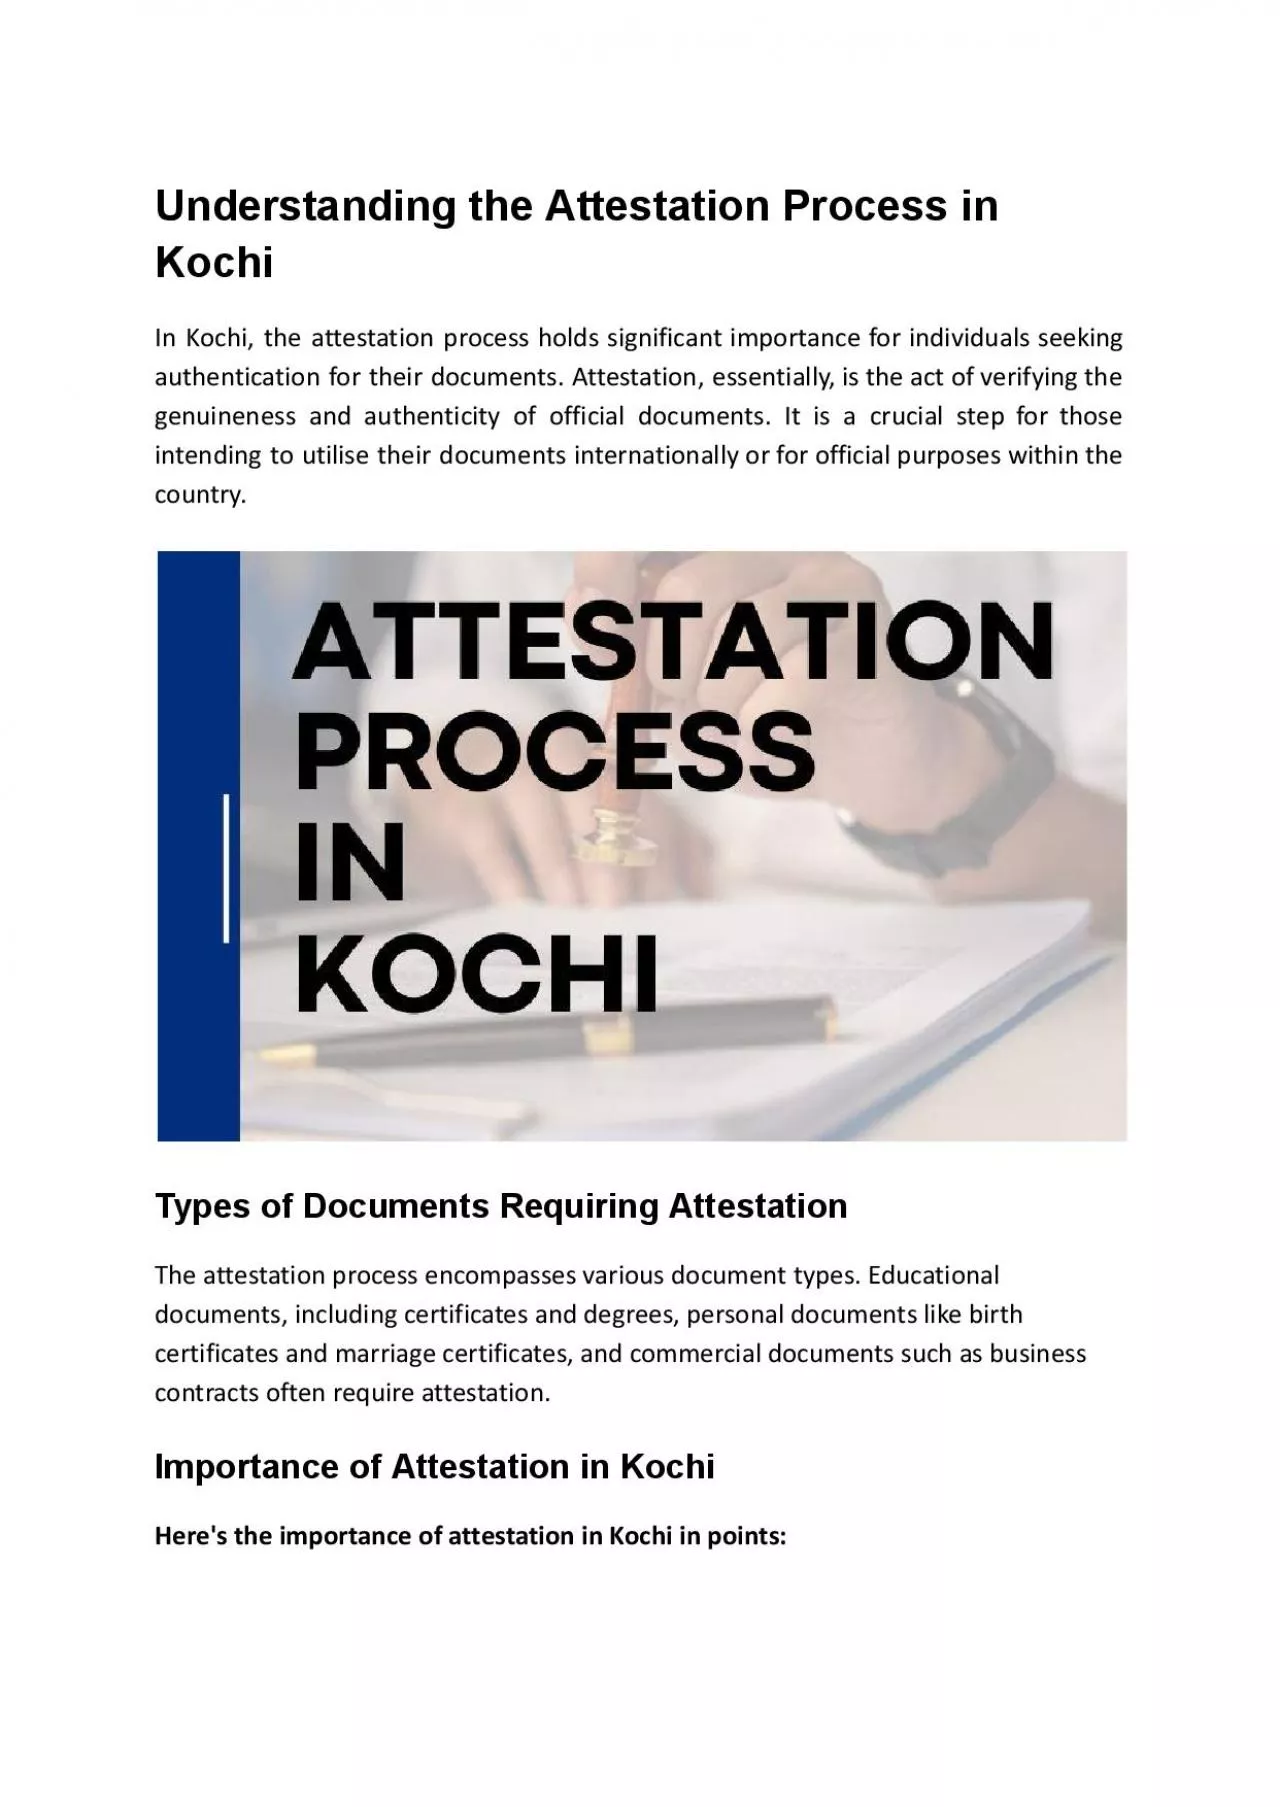 Understanding the Attestation Process in Kochi